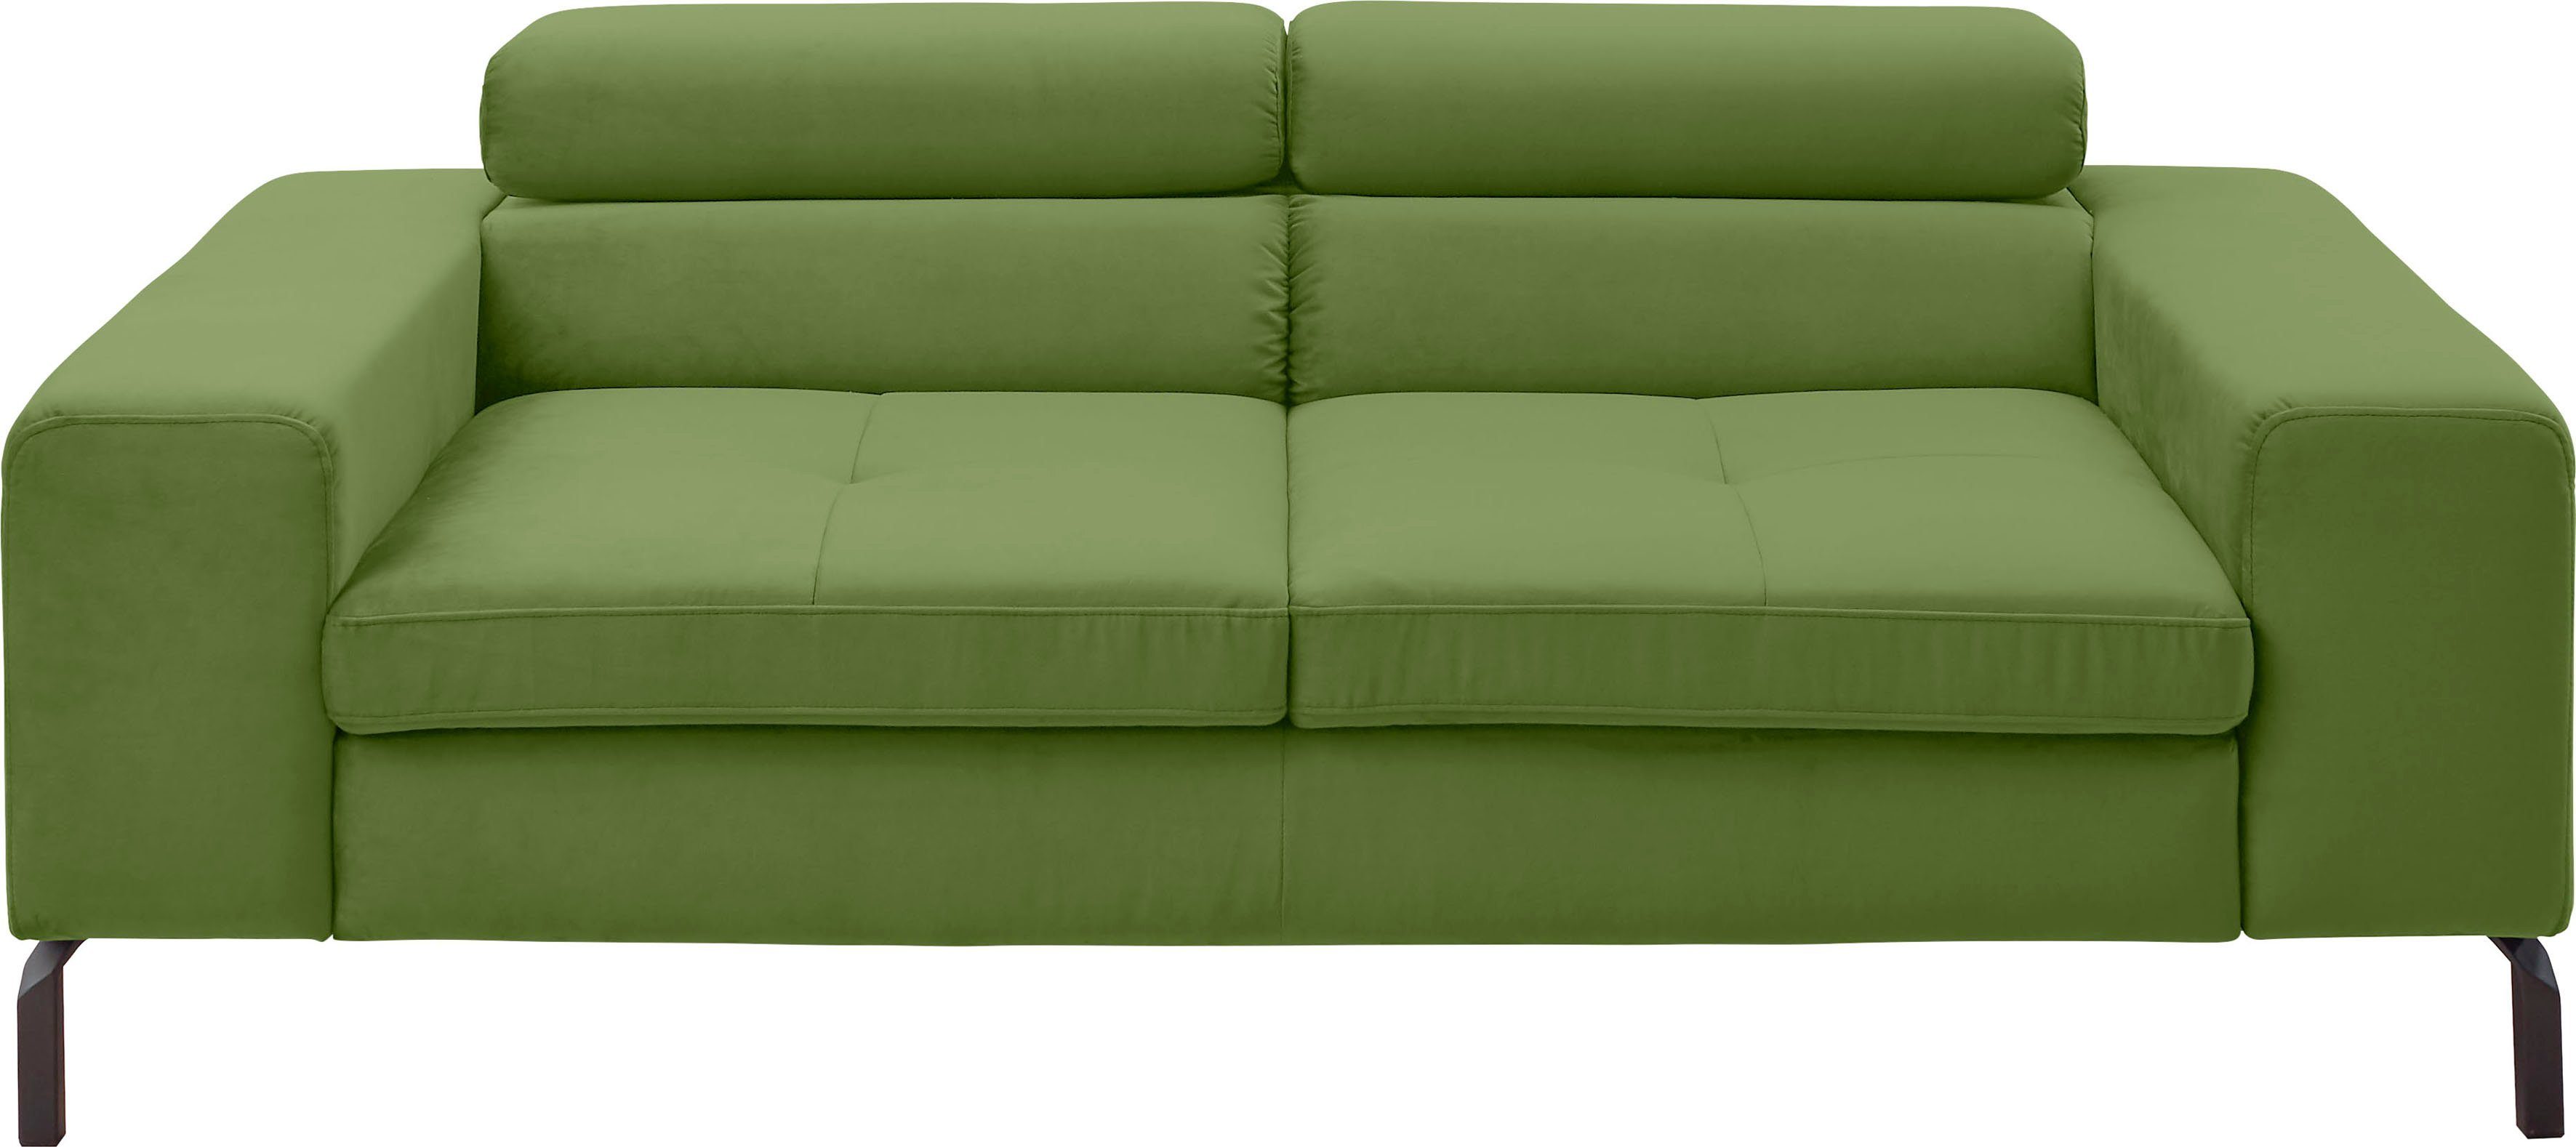 by Wahlweise Sitzvorzug, GALLERY Felicia 2-Sitzer green M Due, mit inklusive Musterring branded Kopfteilverstellung